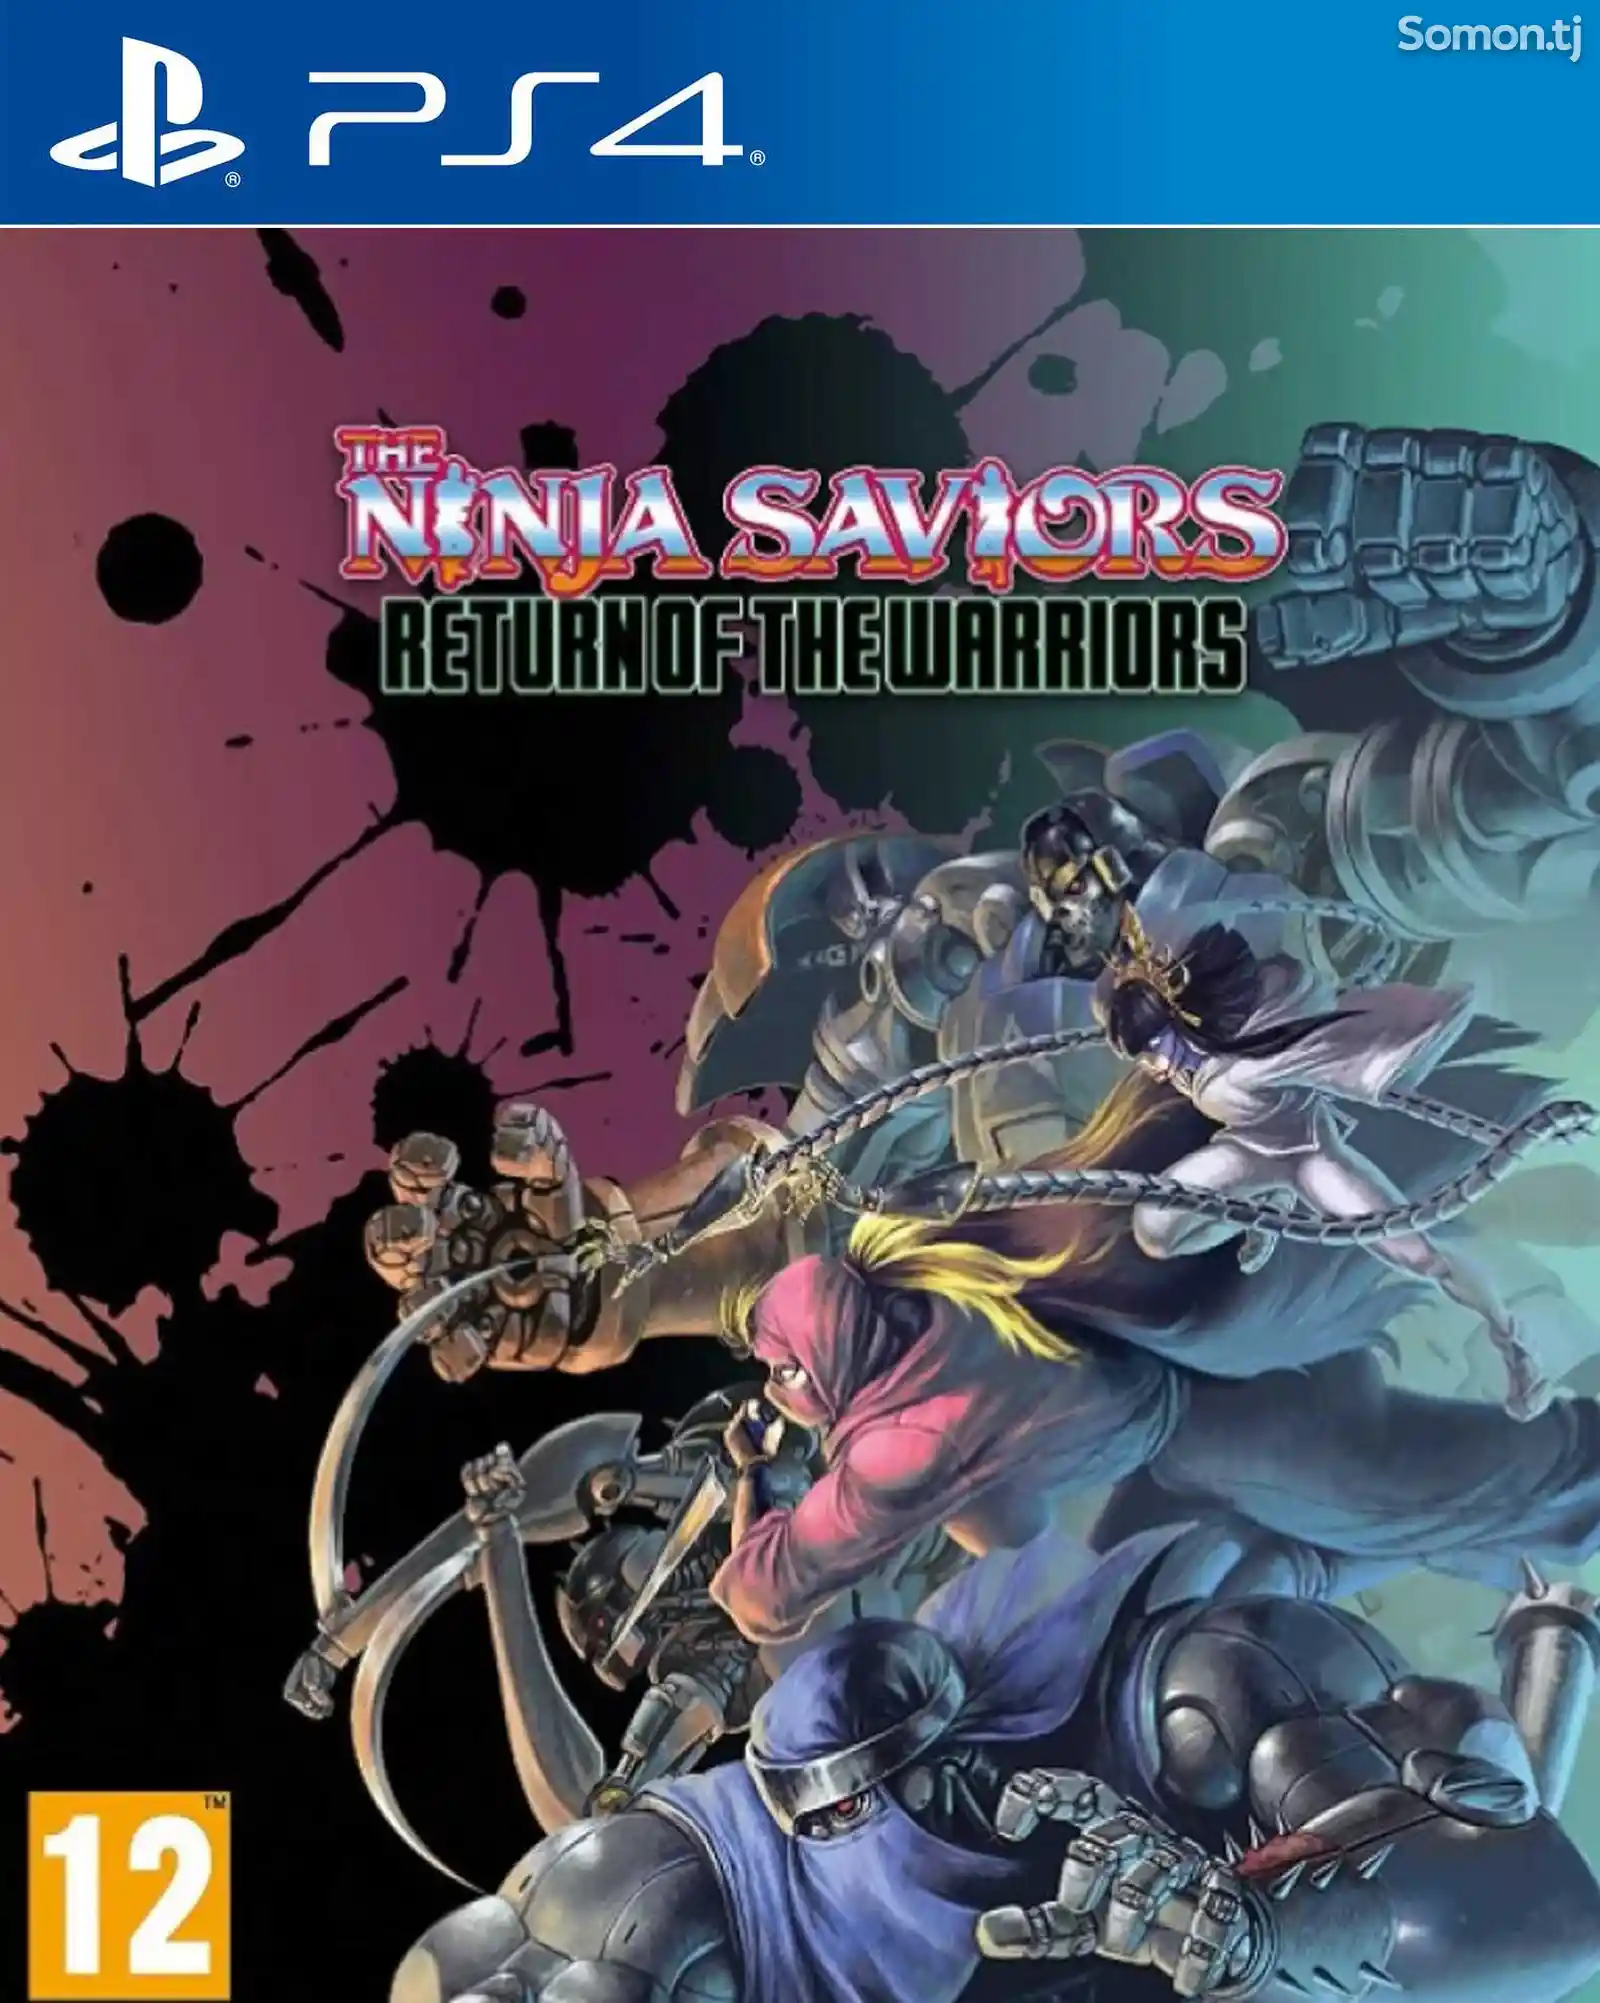 Игра The ninja saviors return of the warriors для PS-4 / 5.05 / 6.72 / 9.00 /-1